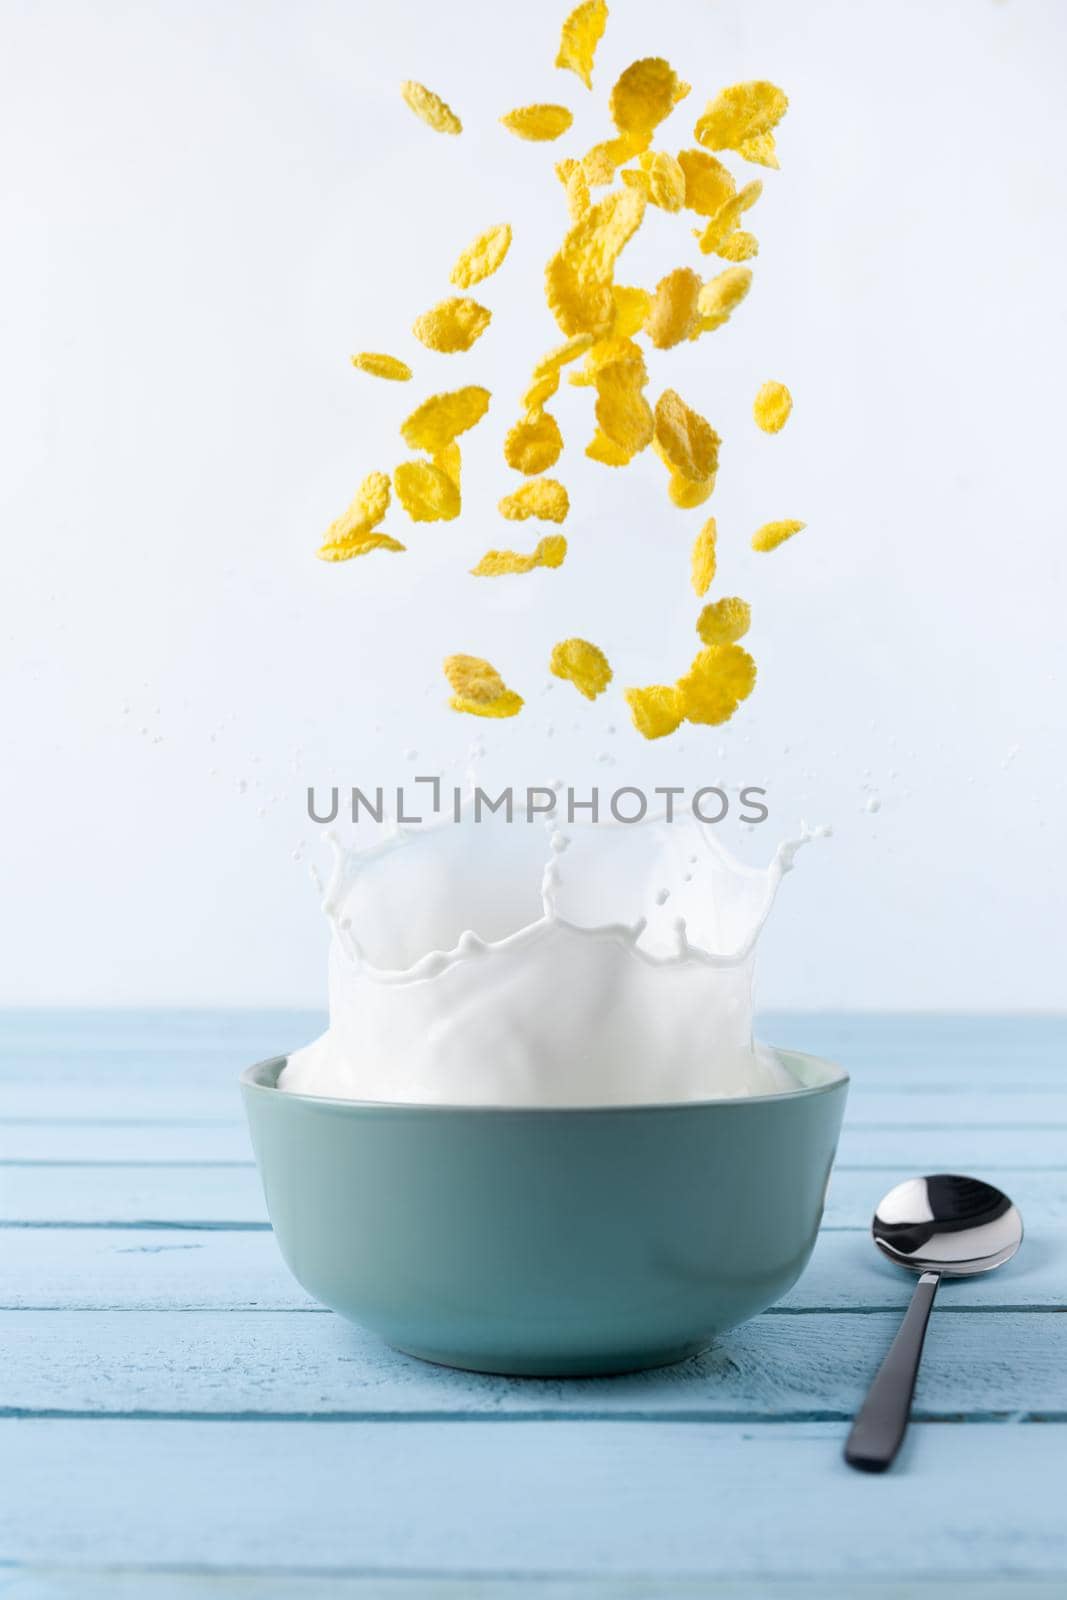 Healthy Breakfast-Cornflakes and Milk Splash on blue background by sashokddt